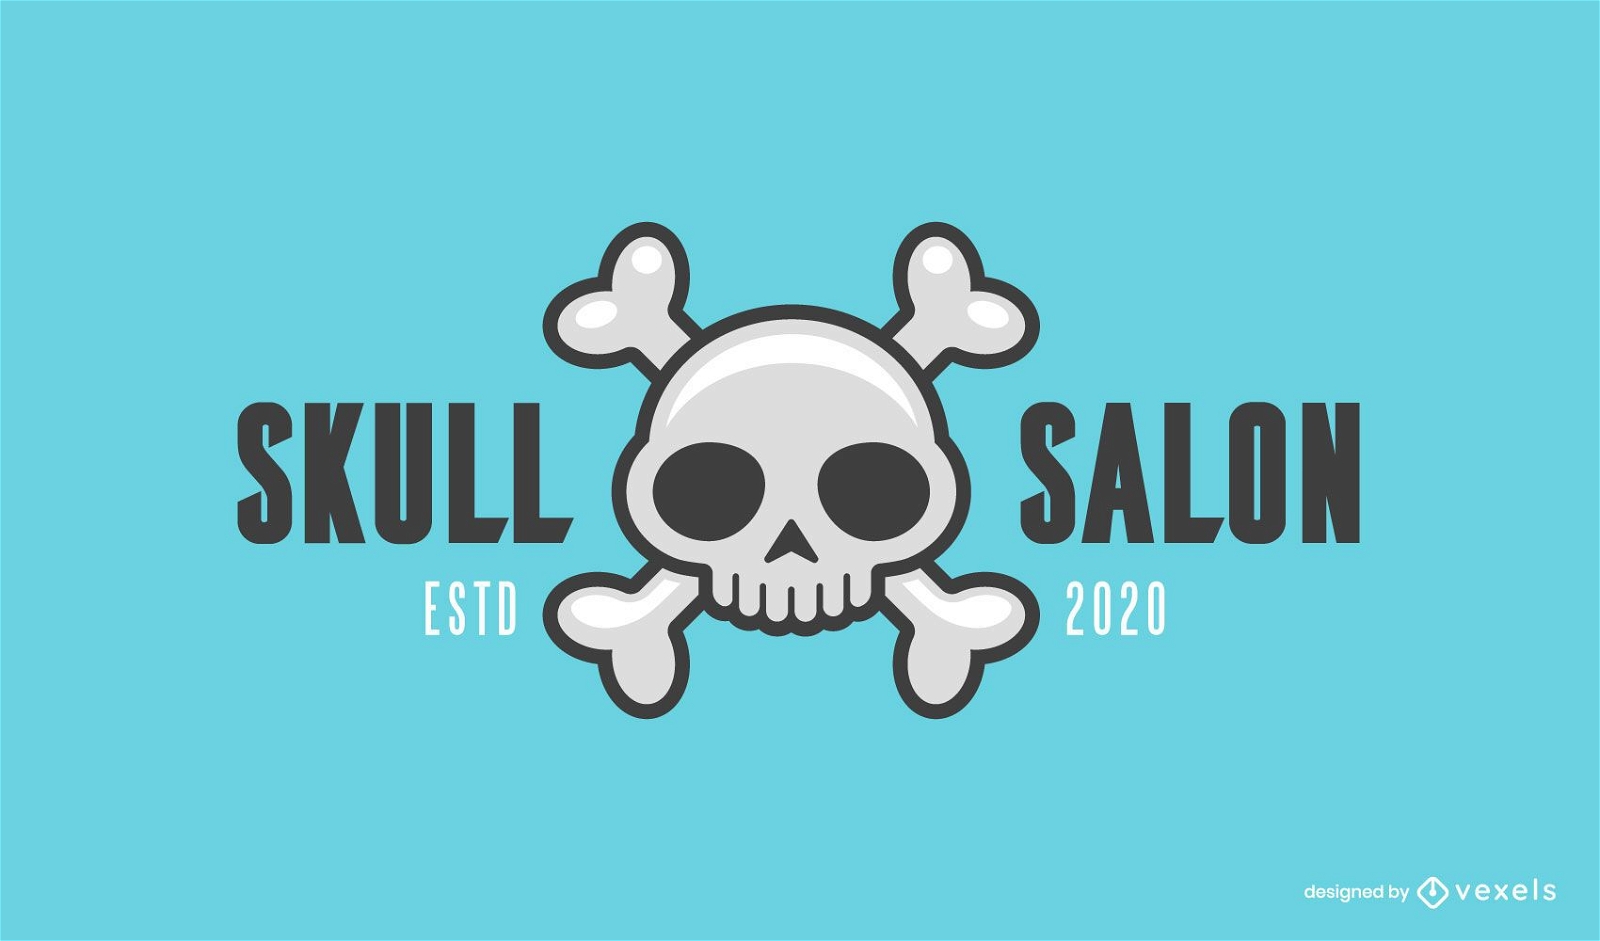 Skull salon logo template